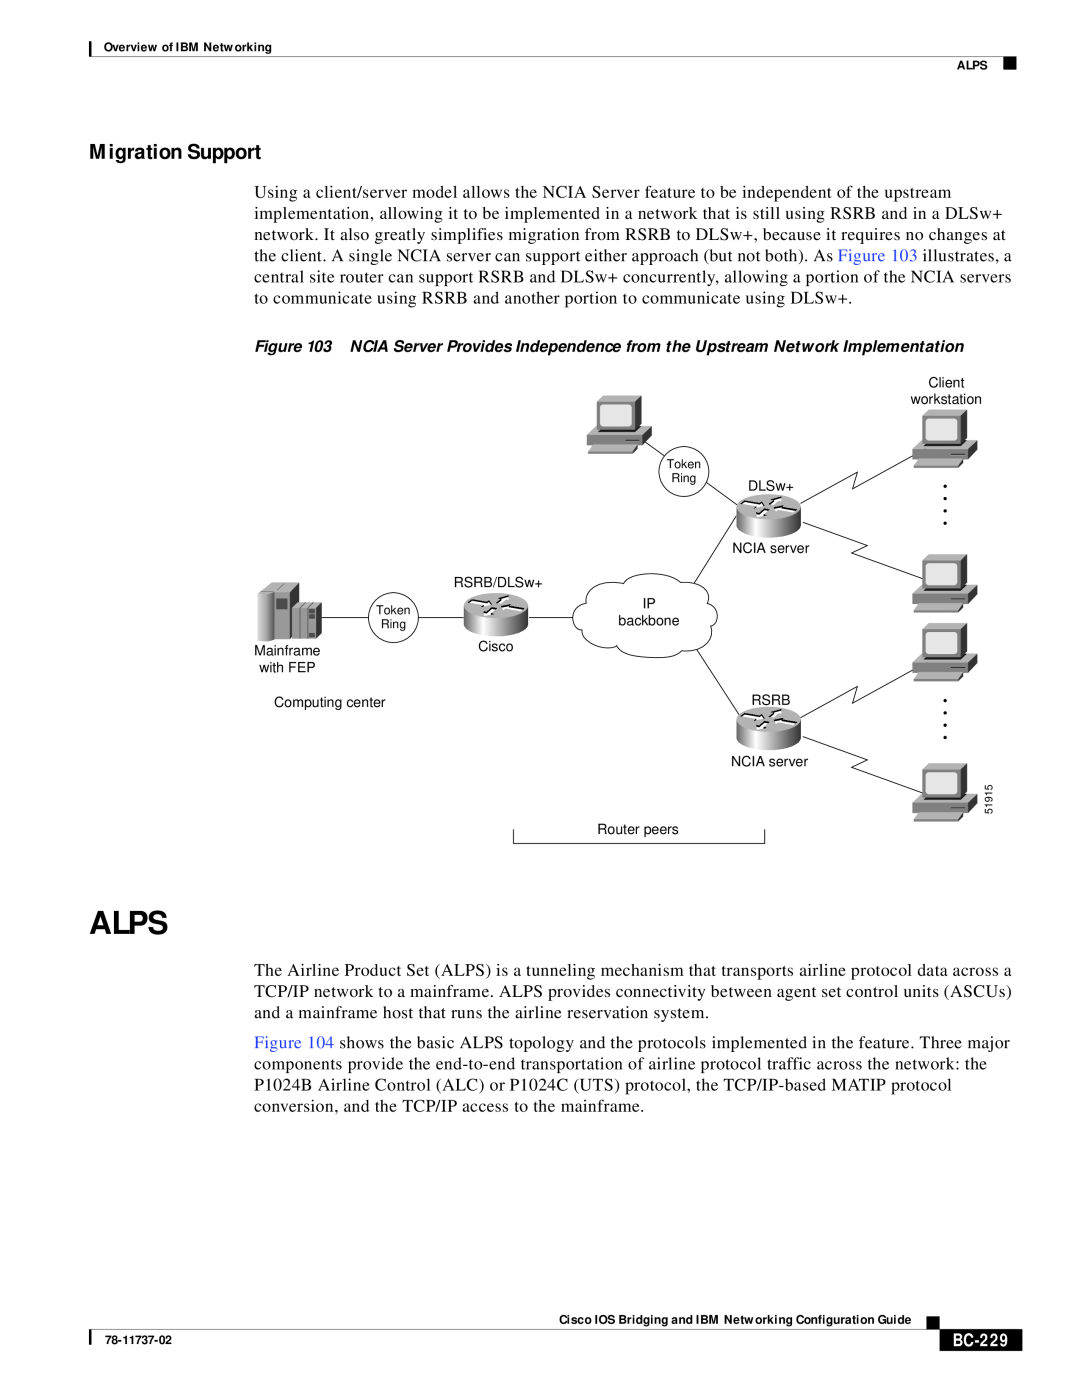 IBM BC-201 manual Alps, Migration Support, BC-229 